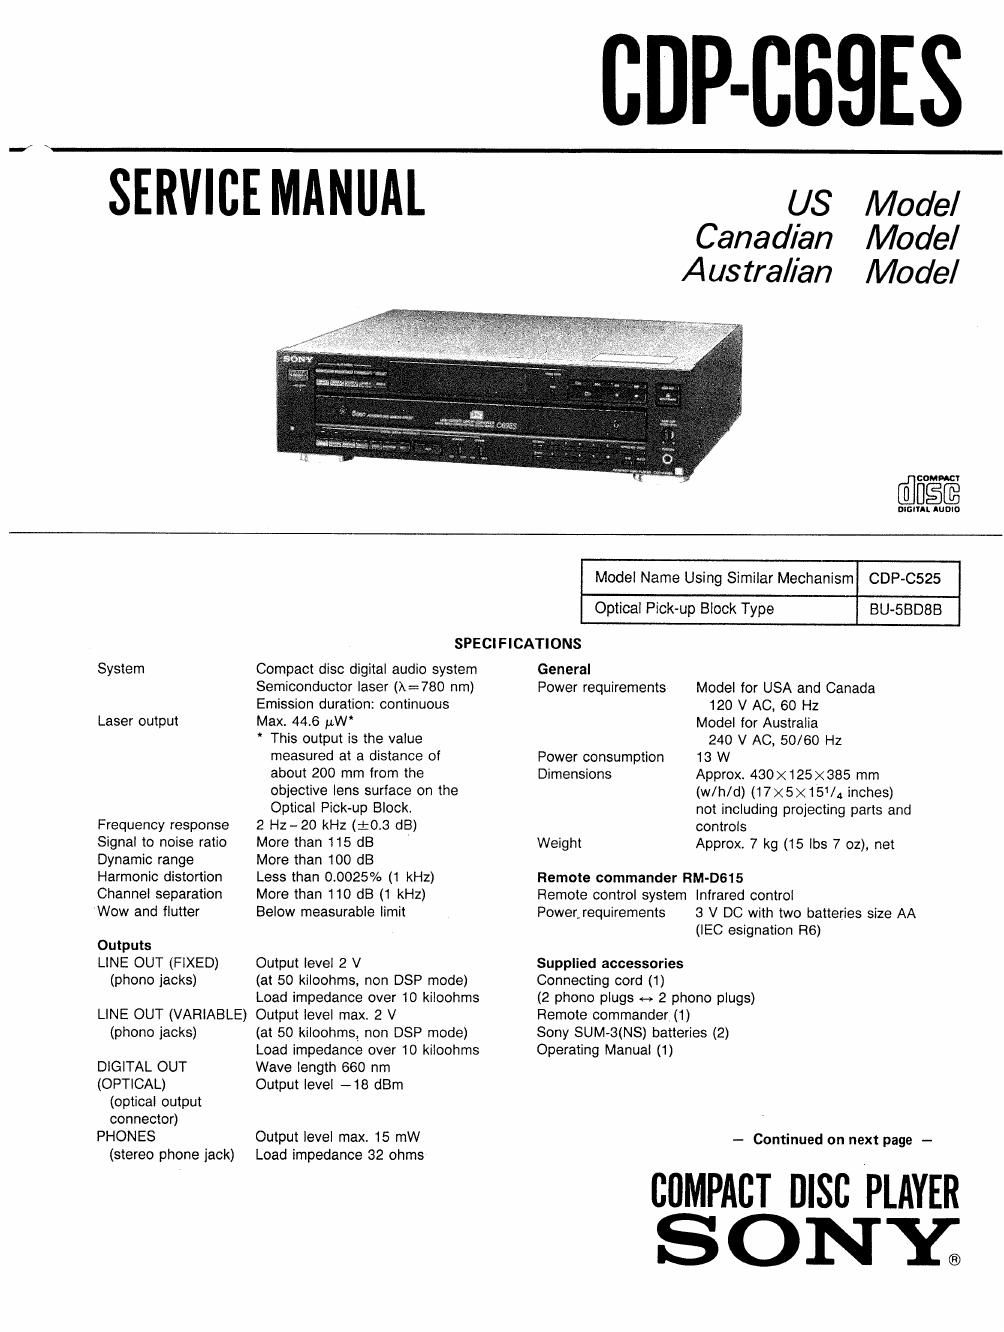 sony cdp c 69 es service manual